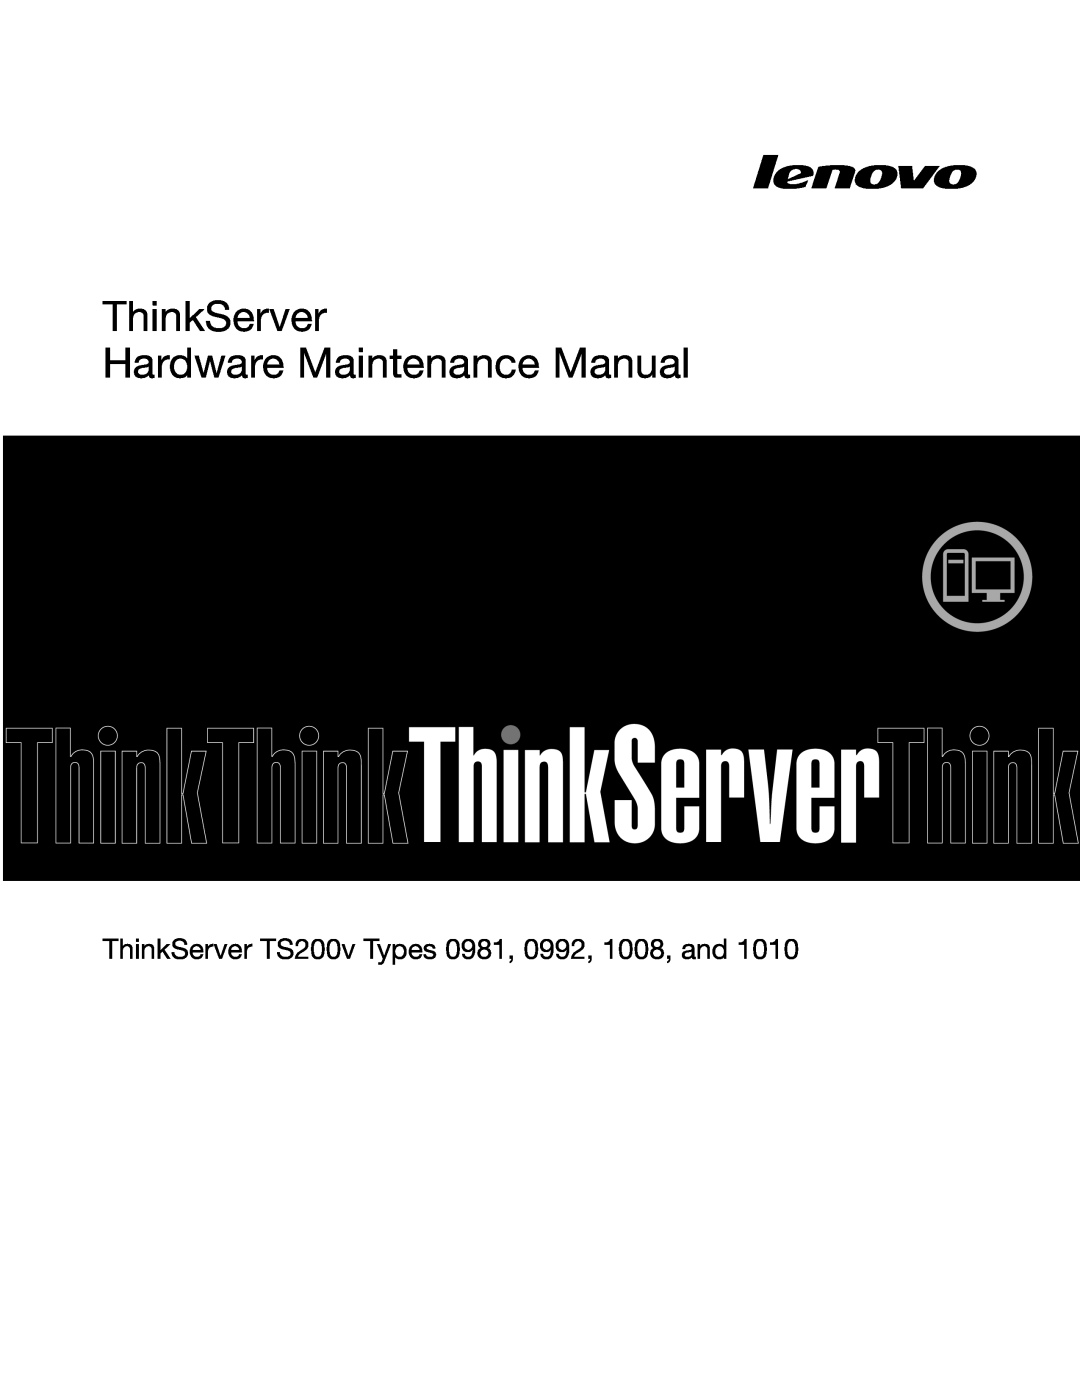 Lenovo 1010 manual ThinkServer Hardware Maintenance Manual, ThinkServer TS200v Types 0981, 0992, 1008, and 